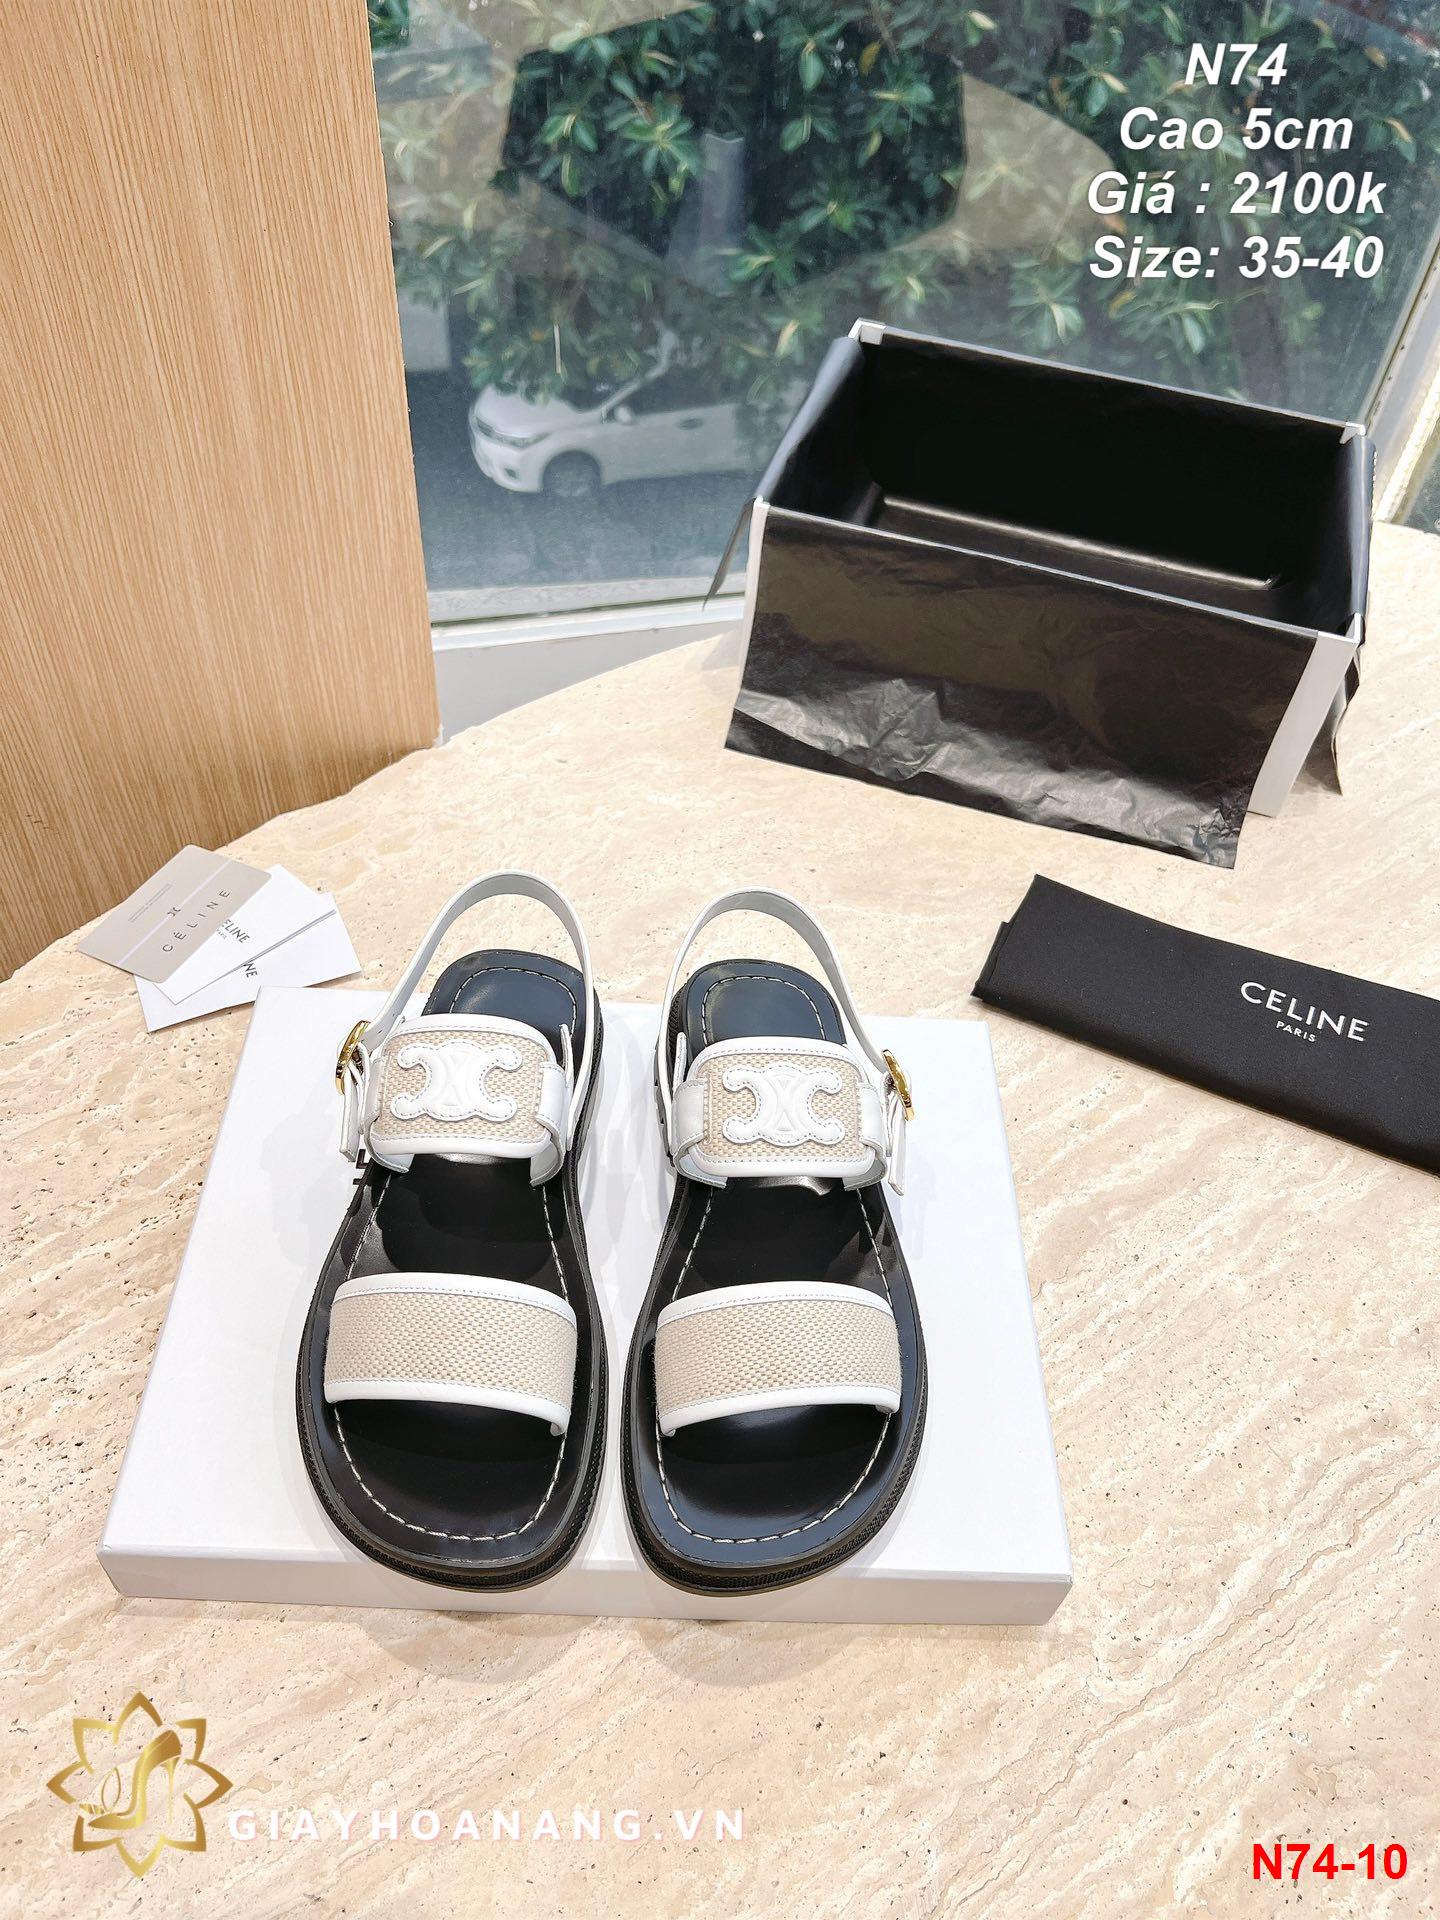 N74-10 Celine sandal cao 5cm siêu cấp